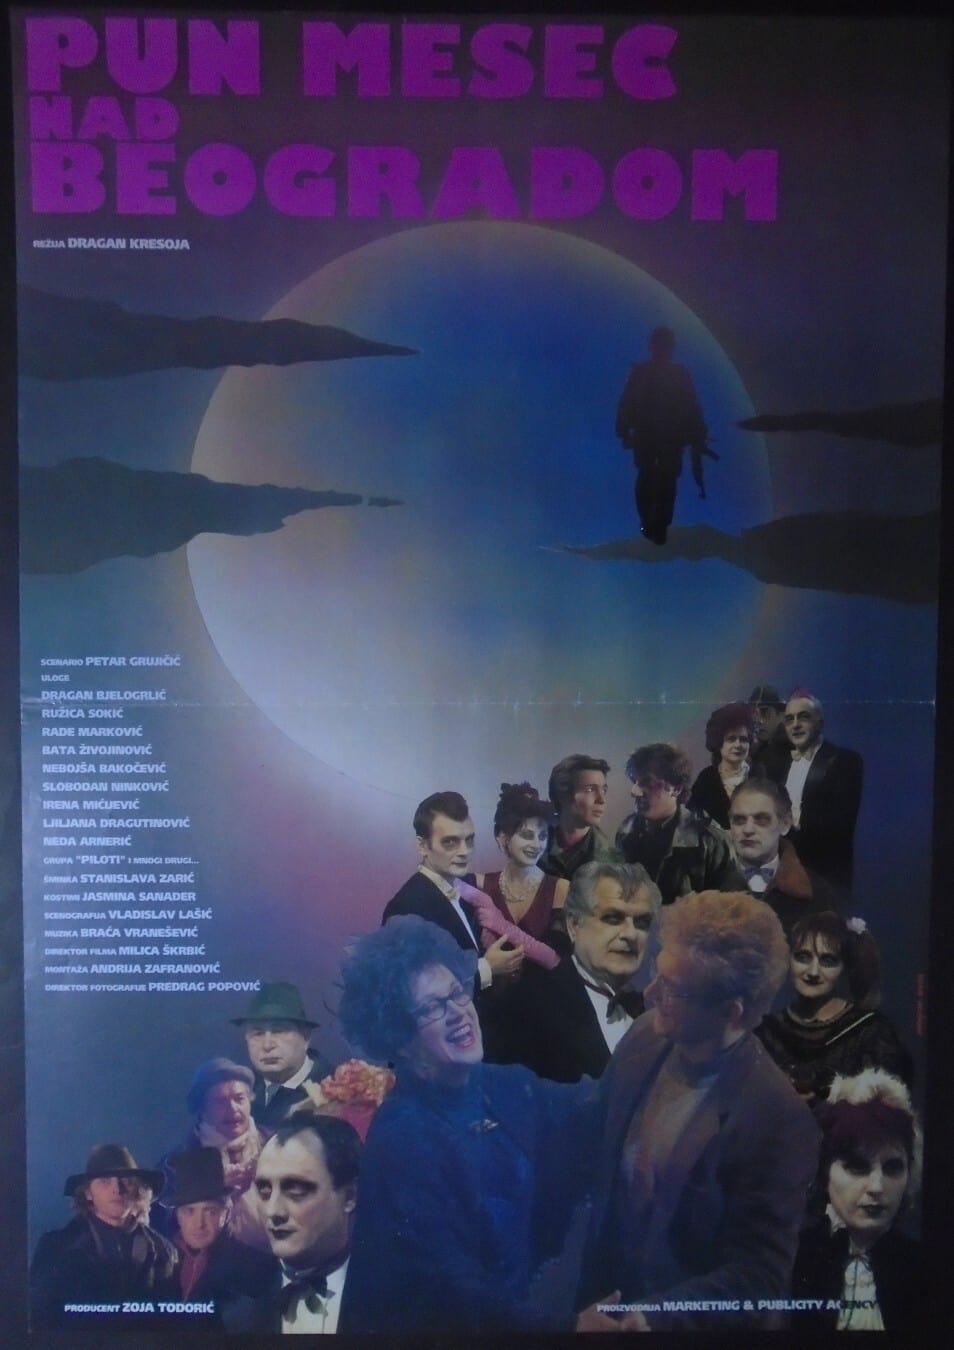 Full Moon Over Belgrade (1993)